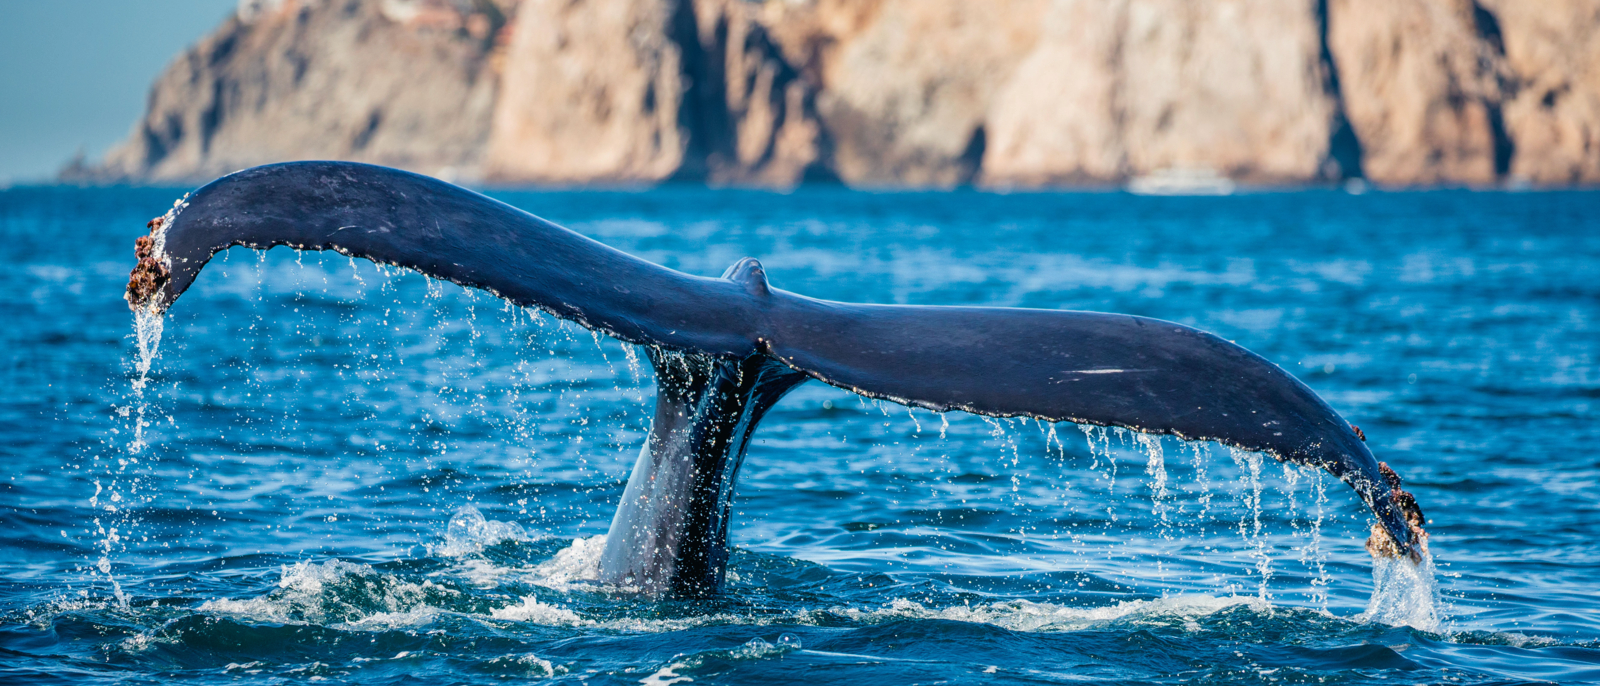 Tail of the humpback whale. Mexico. Sea of Cortez. California Peninsula